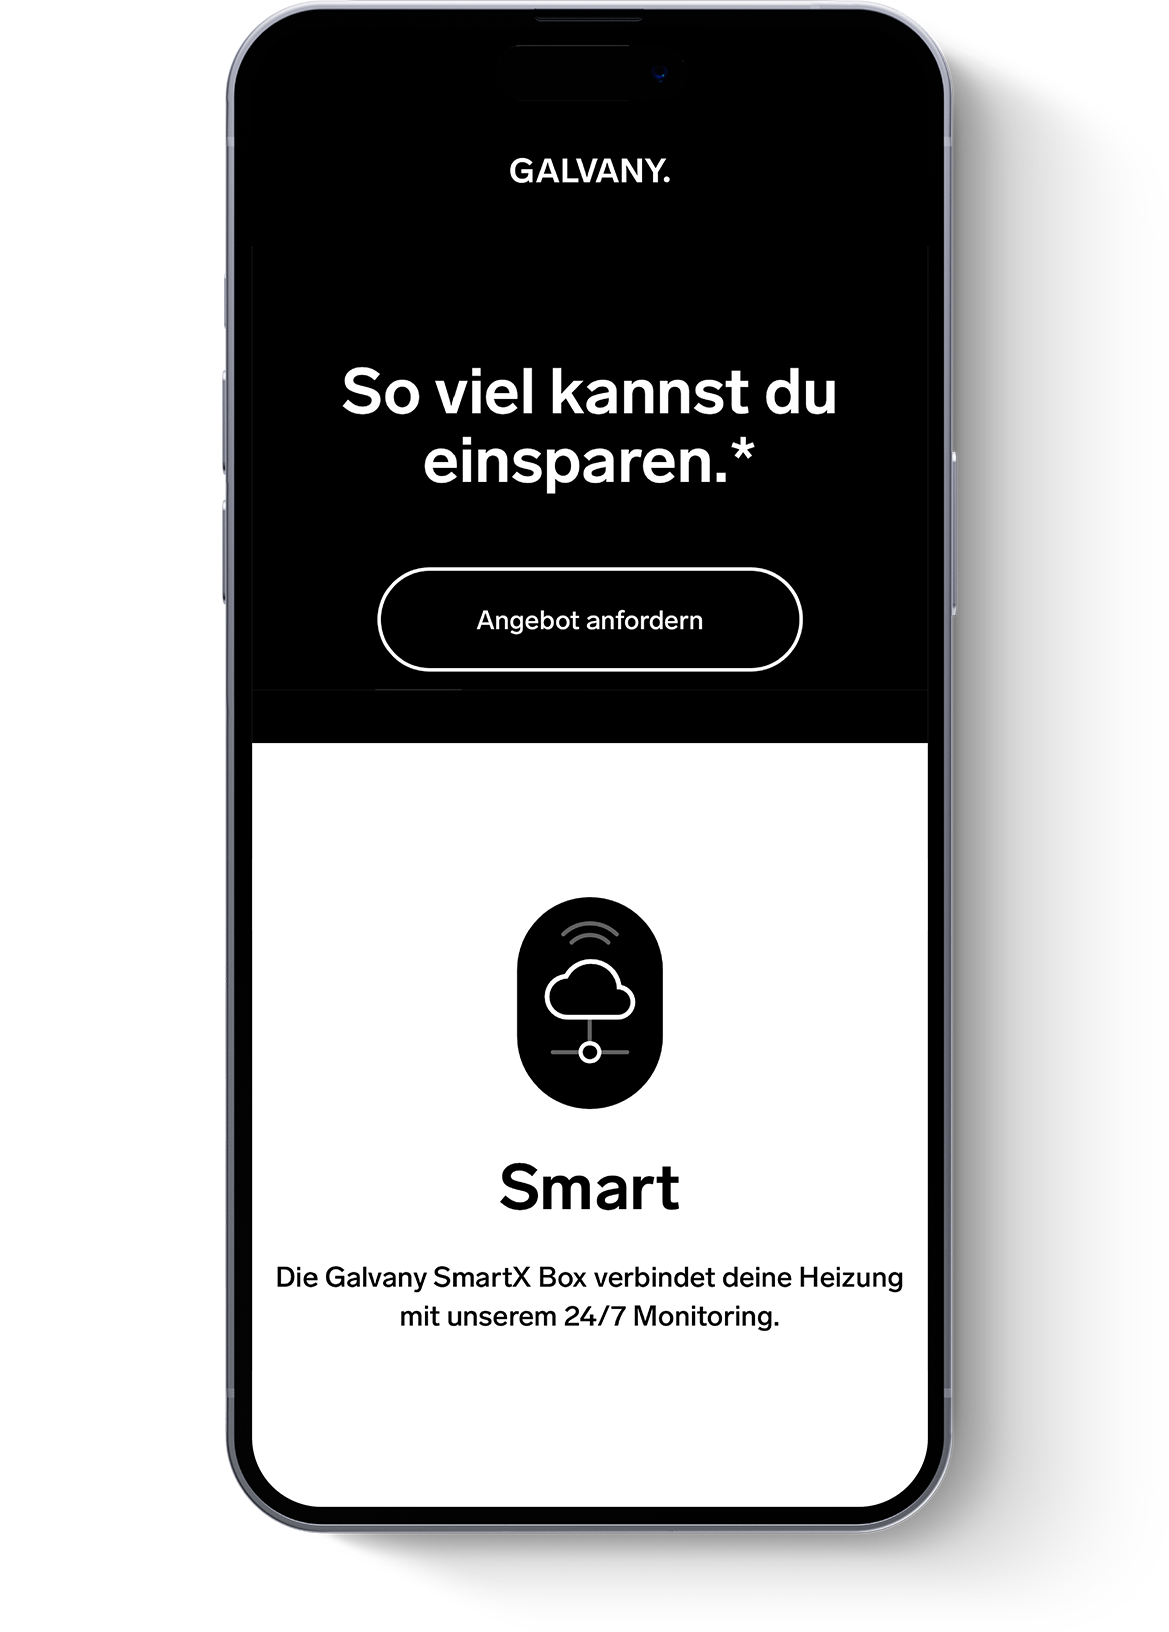 Mobile: Galvany Website Relaunch